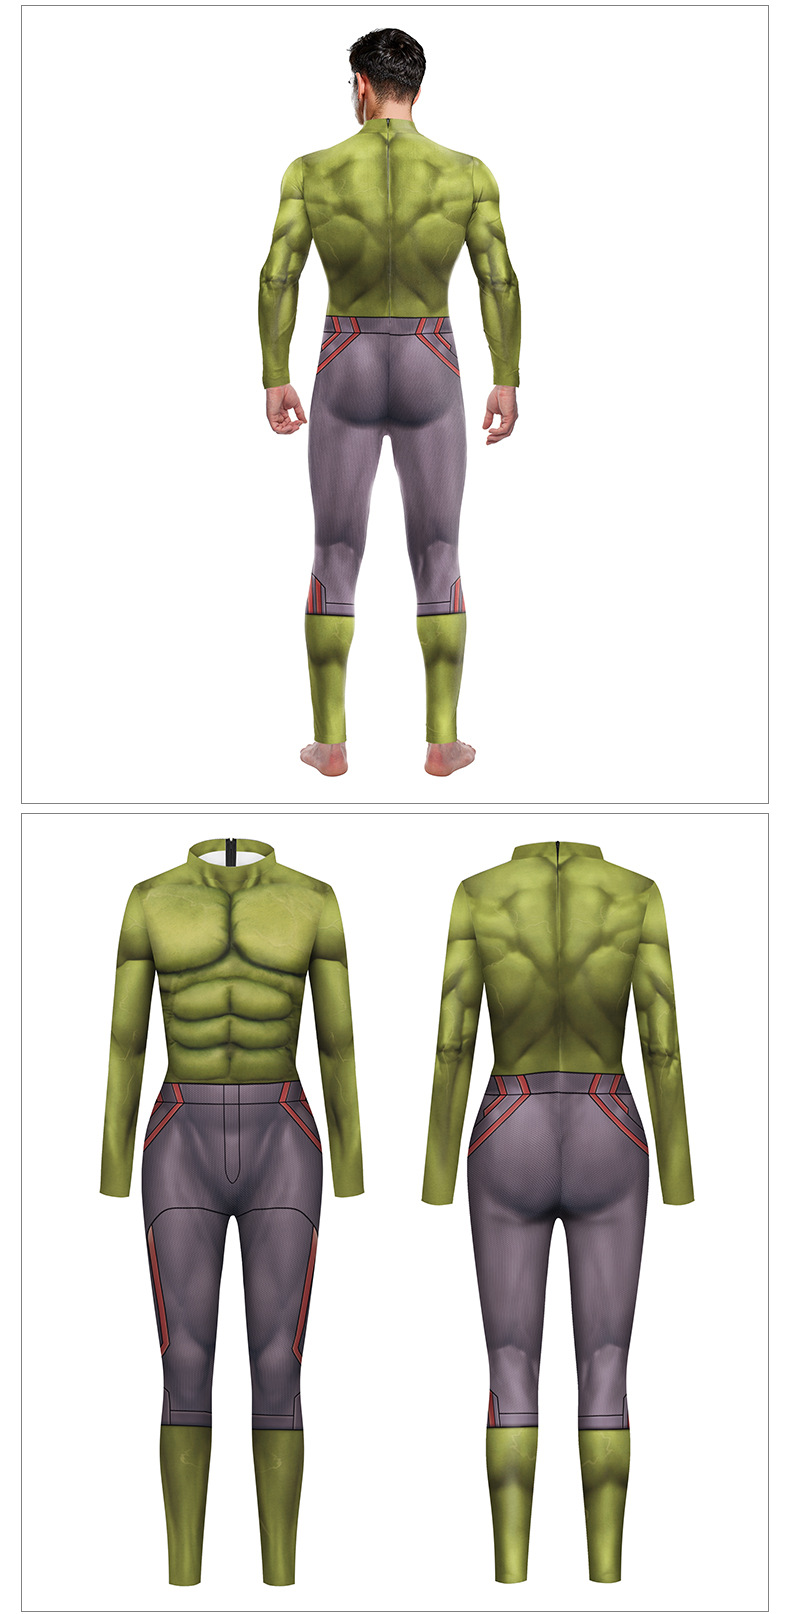 Cool The Incredible Hulk costume jumpsuit - back zipper closure